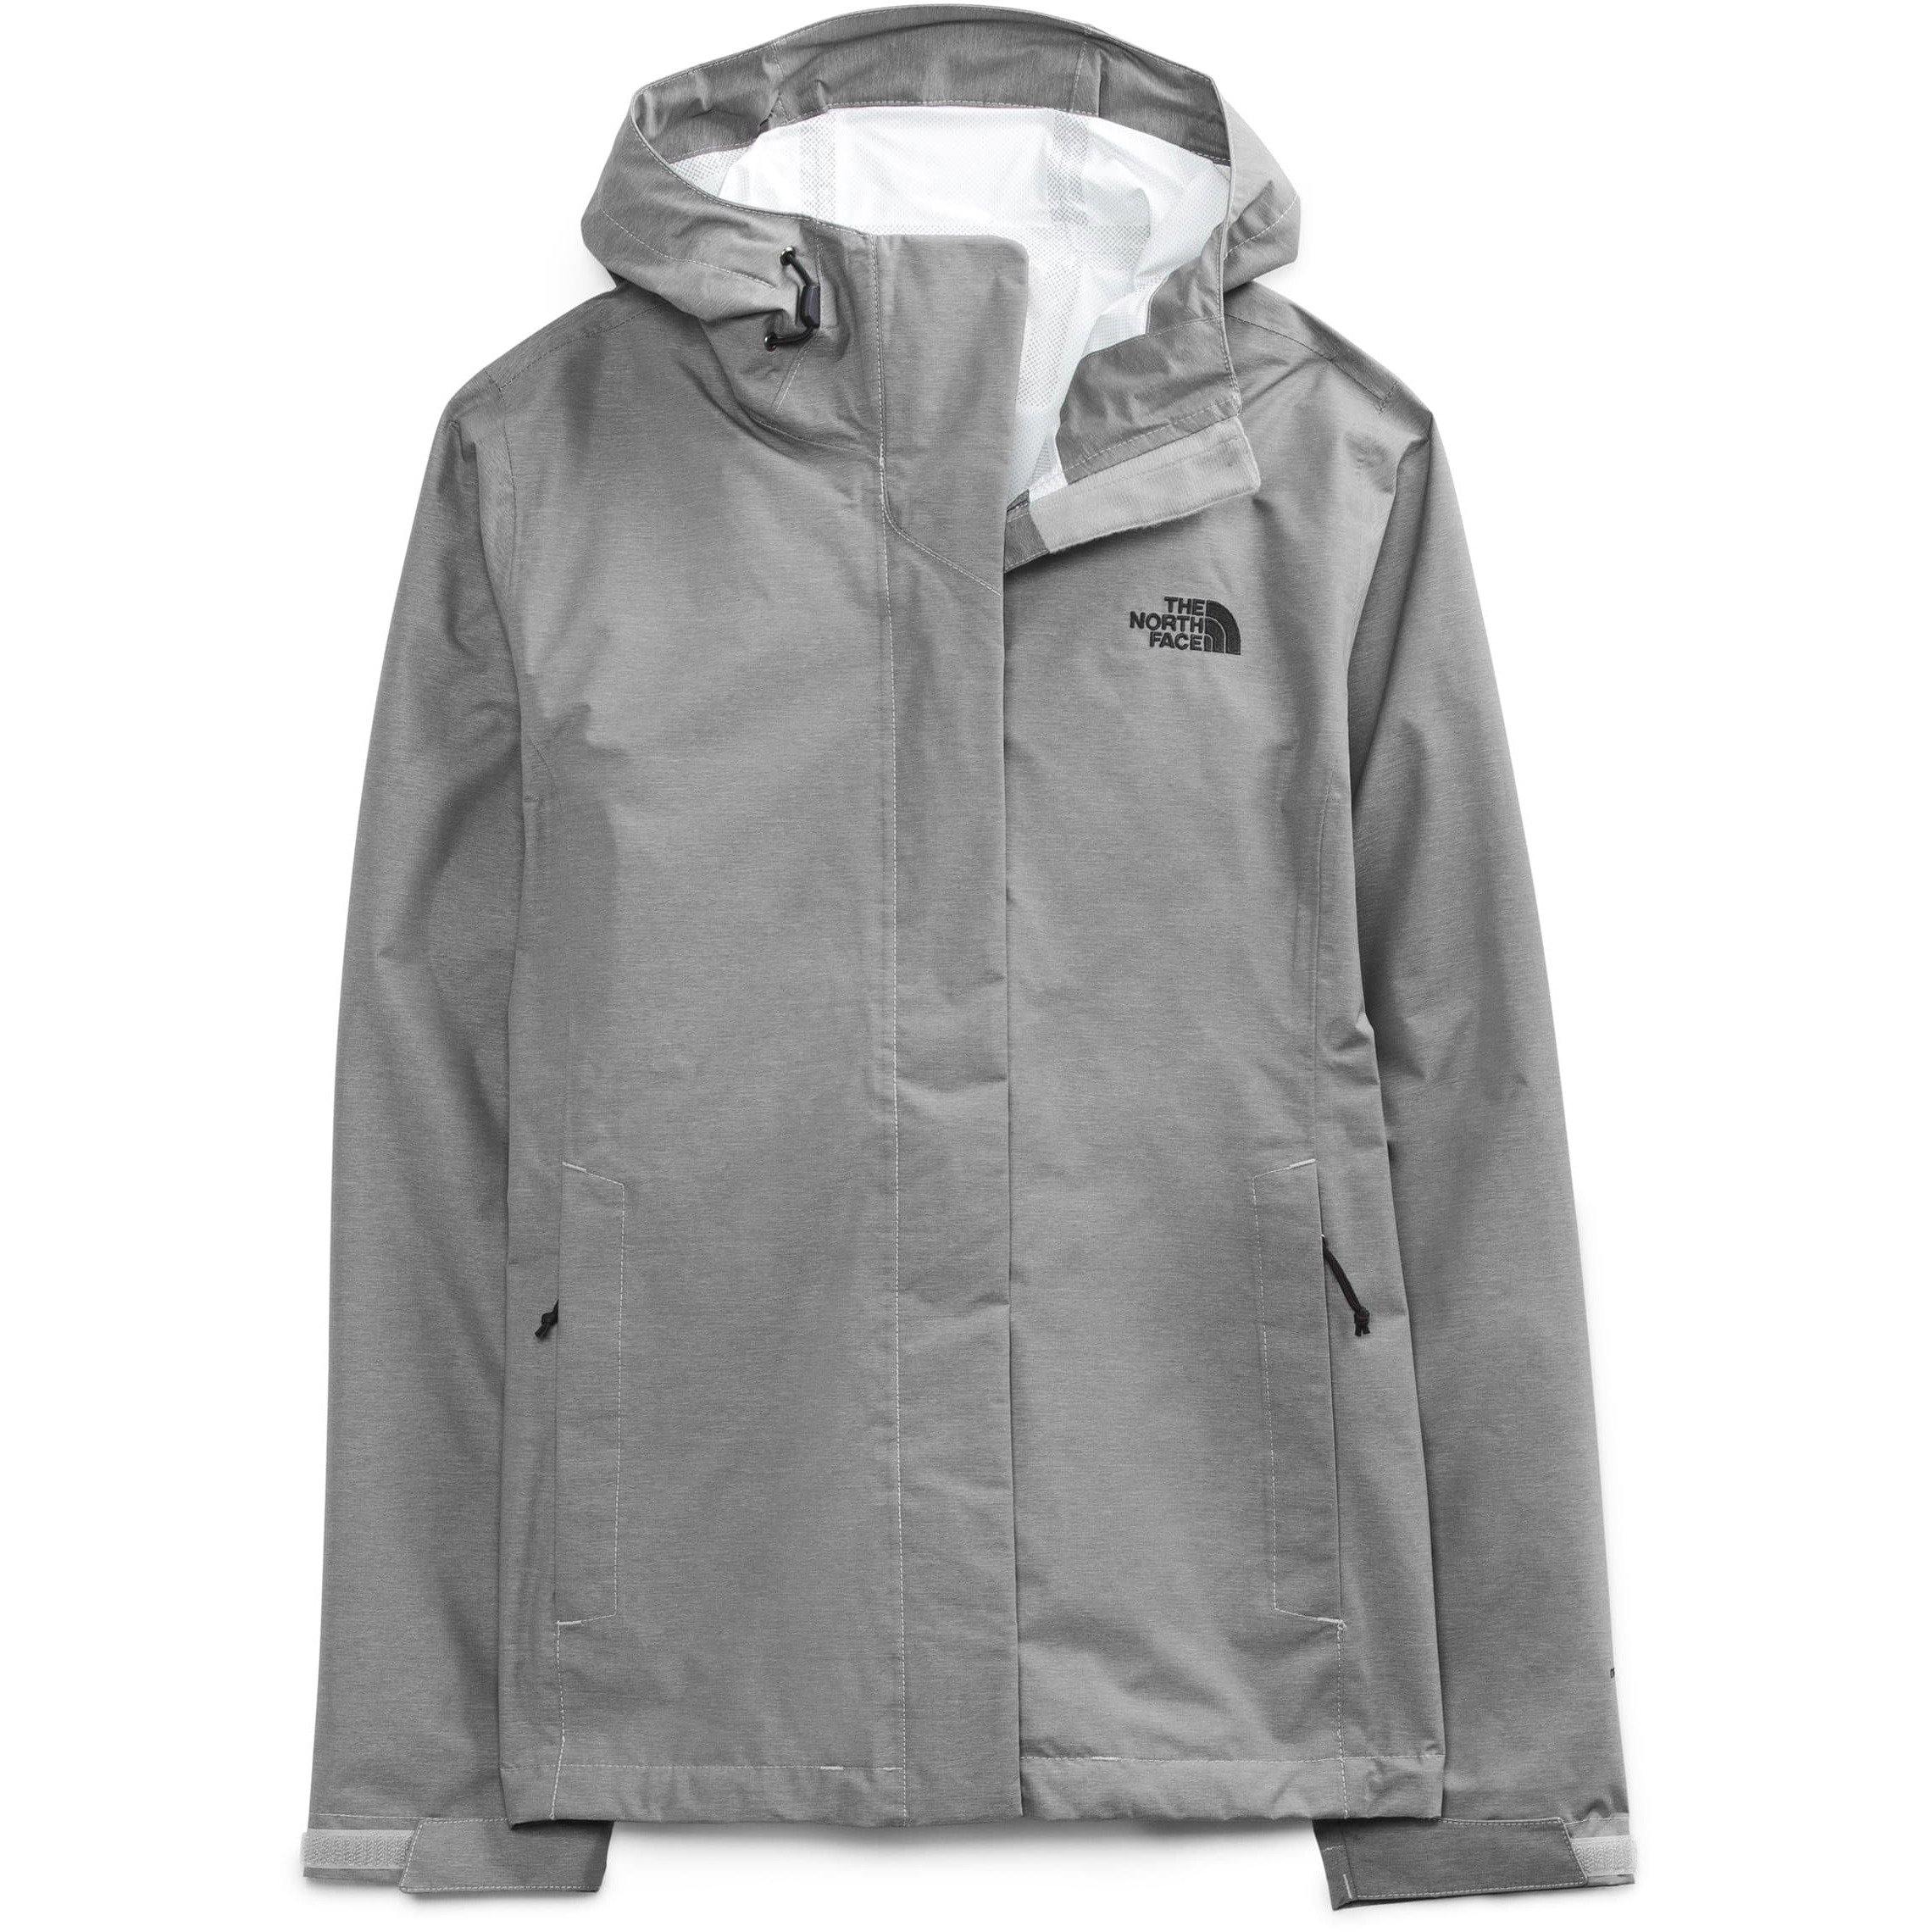 The North Face Men's Venture 2 Jacket - Mid Grey/Mid Grey/TNF Black